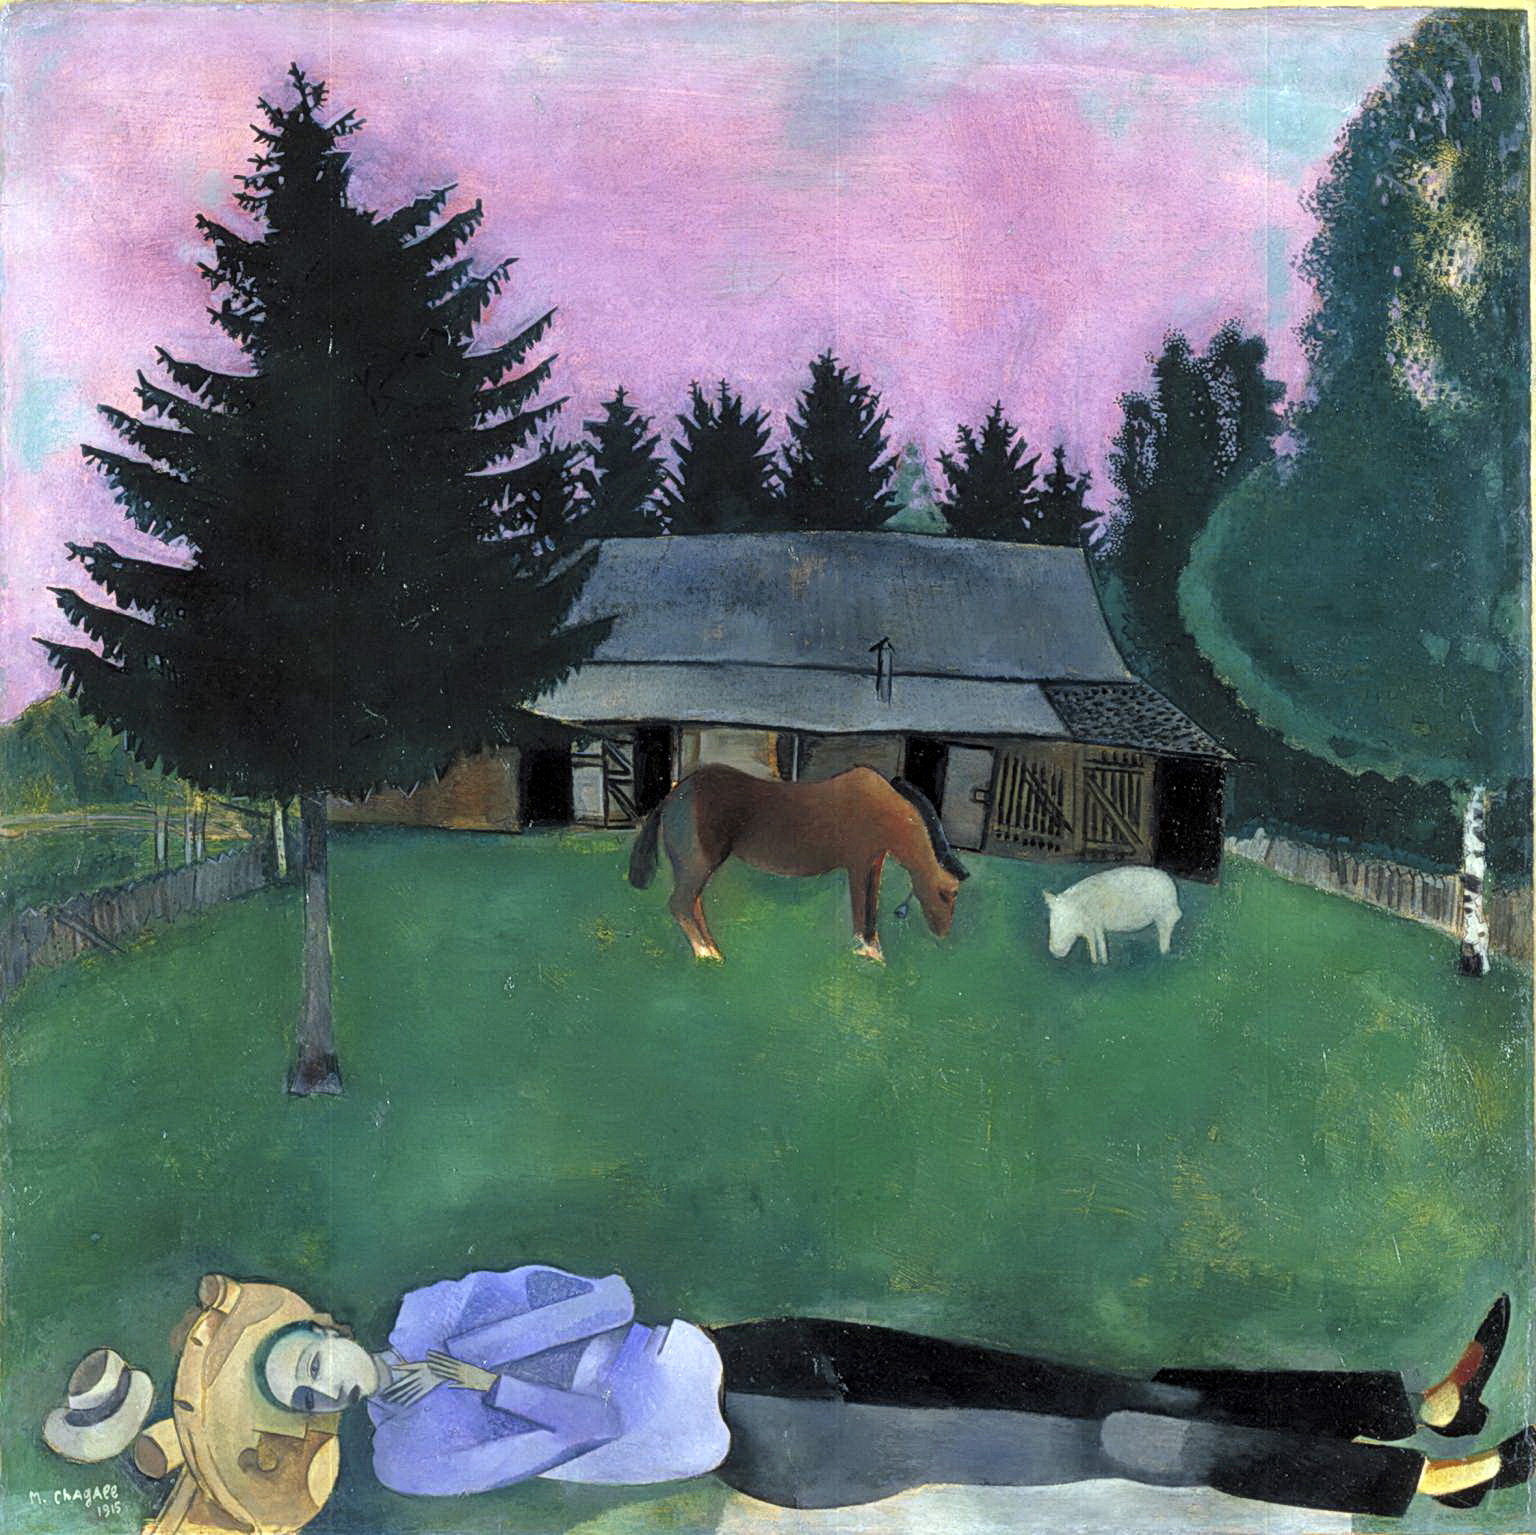 Marc+Chagall-1887-1985 (309).jpg